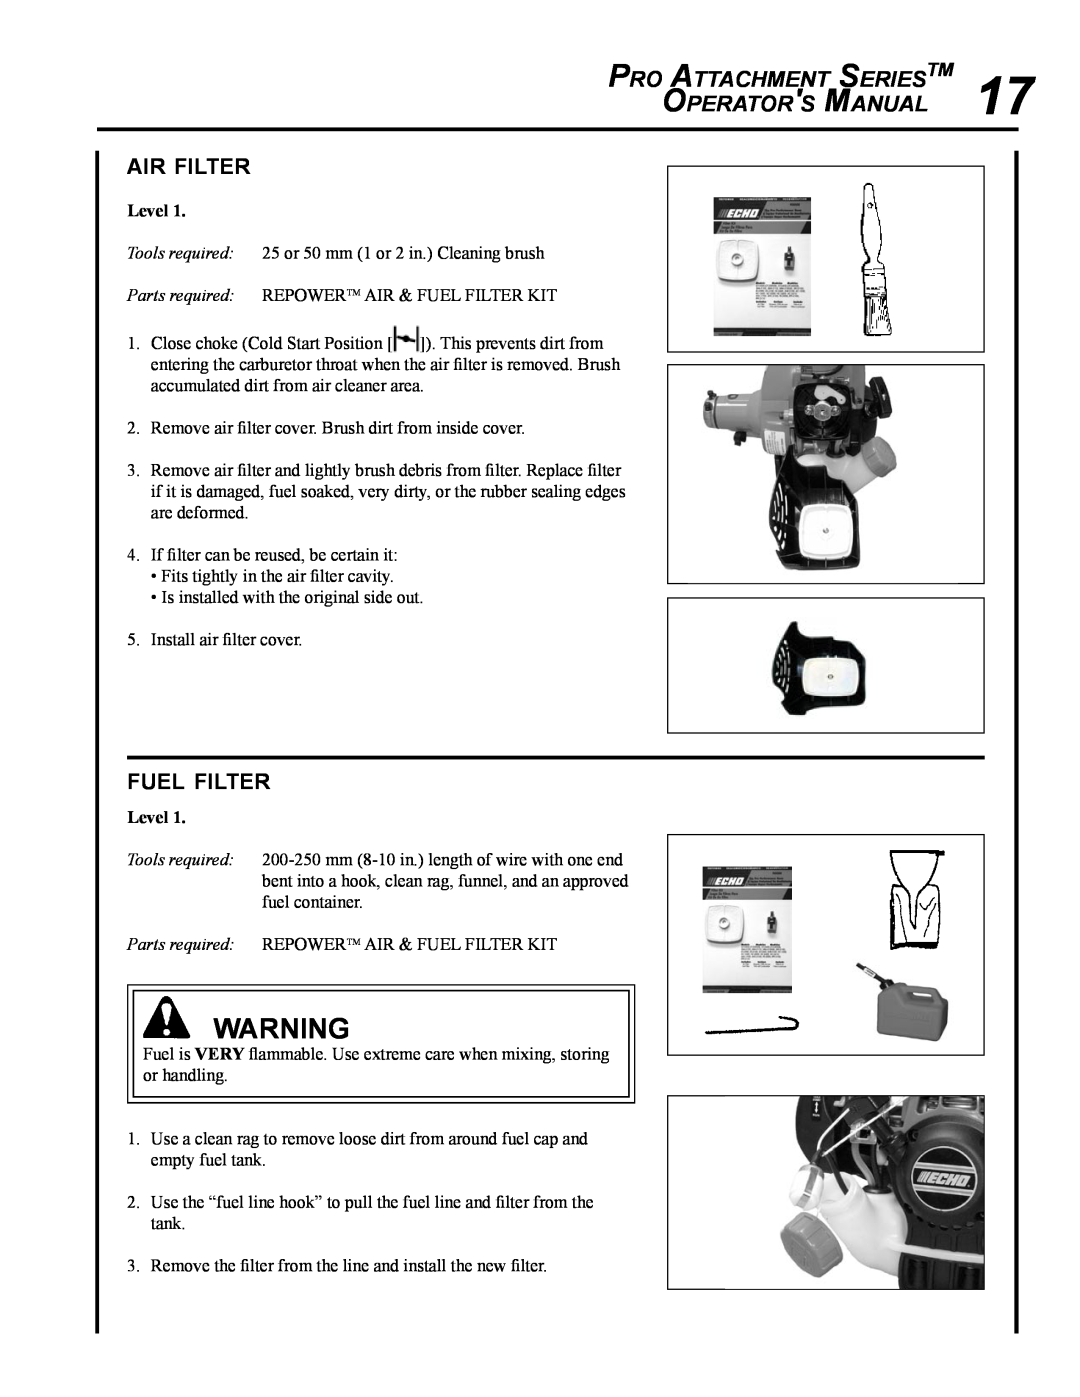 Echo PAS-265 manual air filter, fuel filter, Pro Attachment SeriesTM Operators Manual 